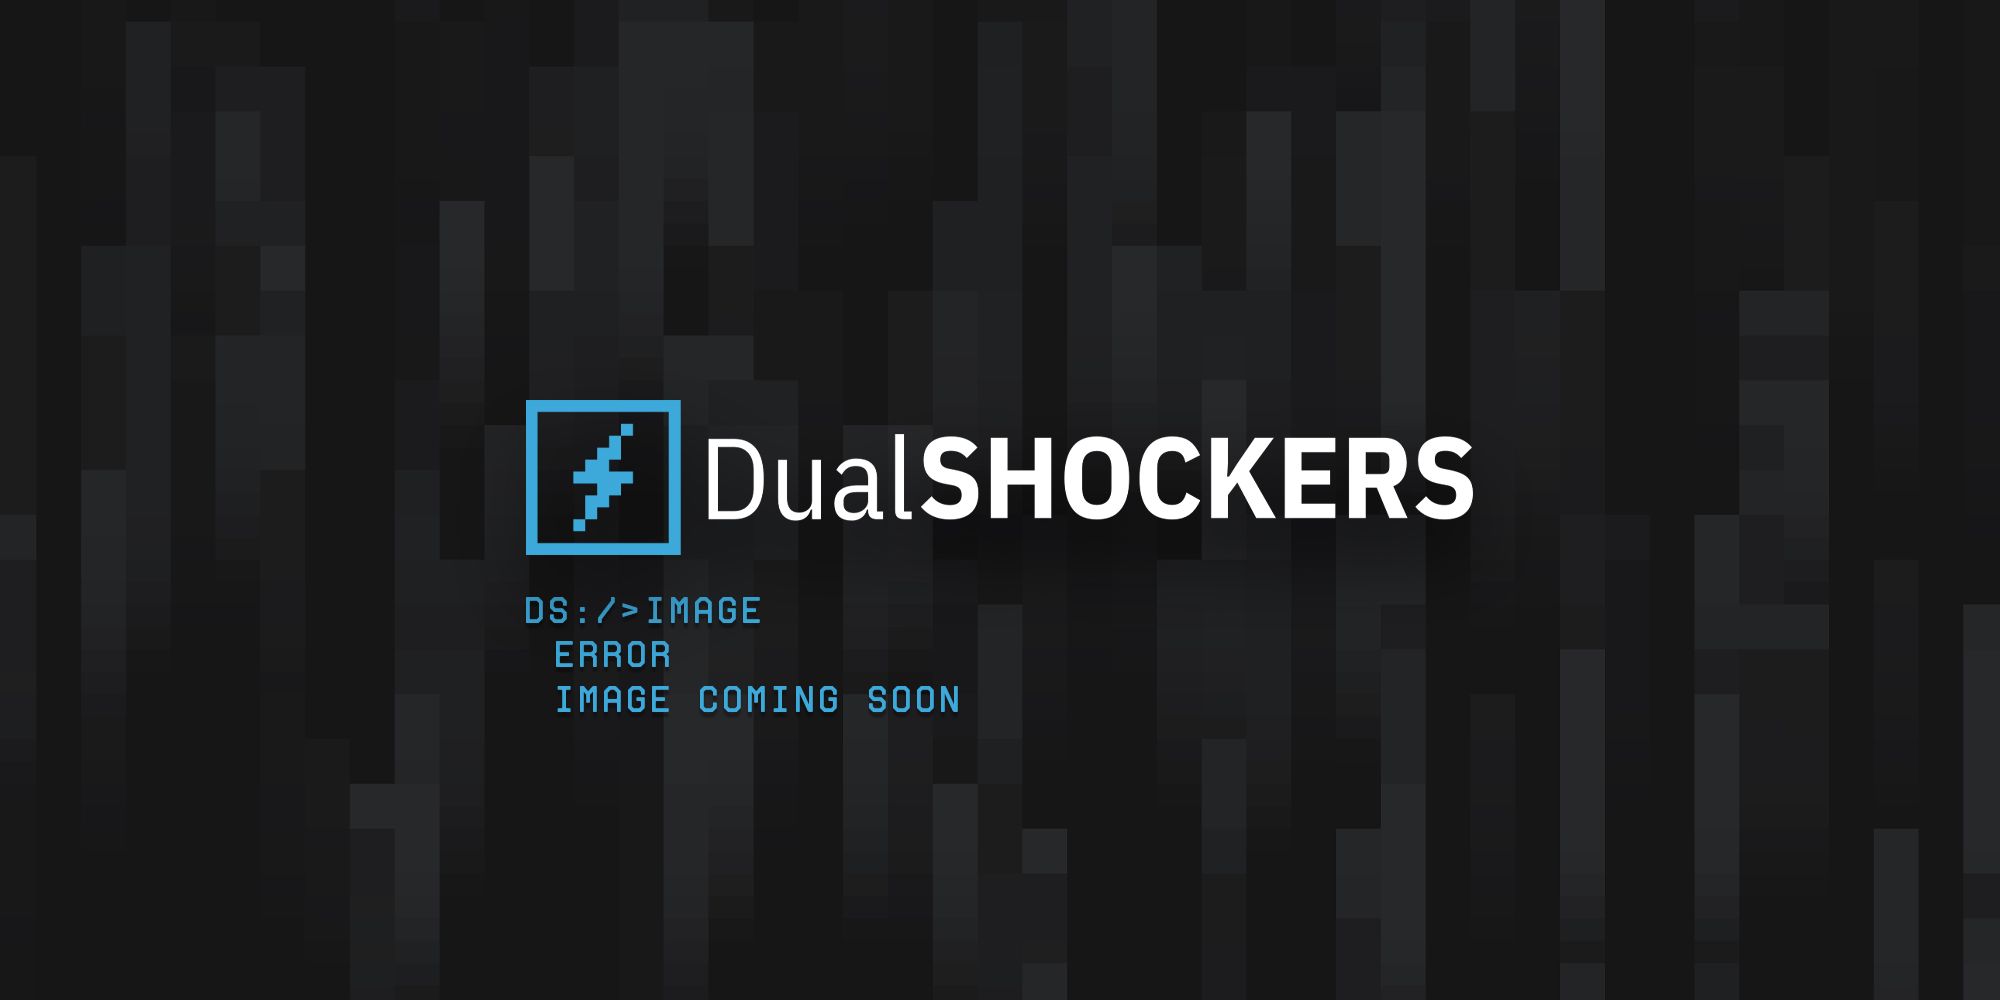 Dualshockers 이미지 자리 표시자 보류 중인 달력